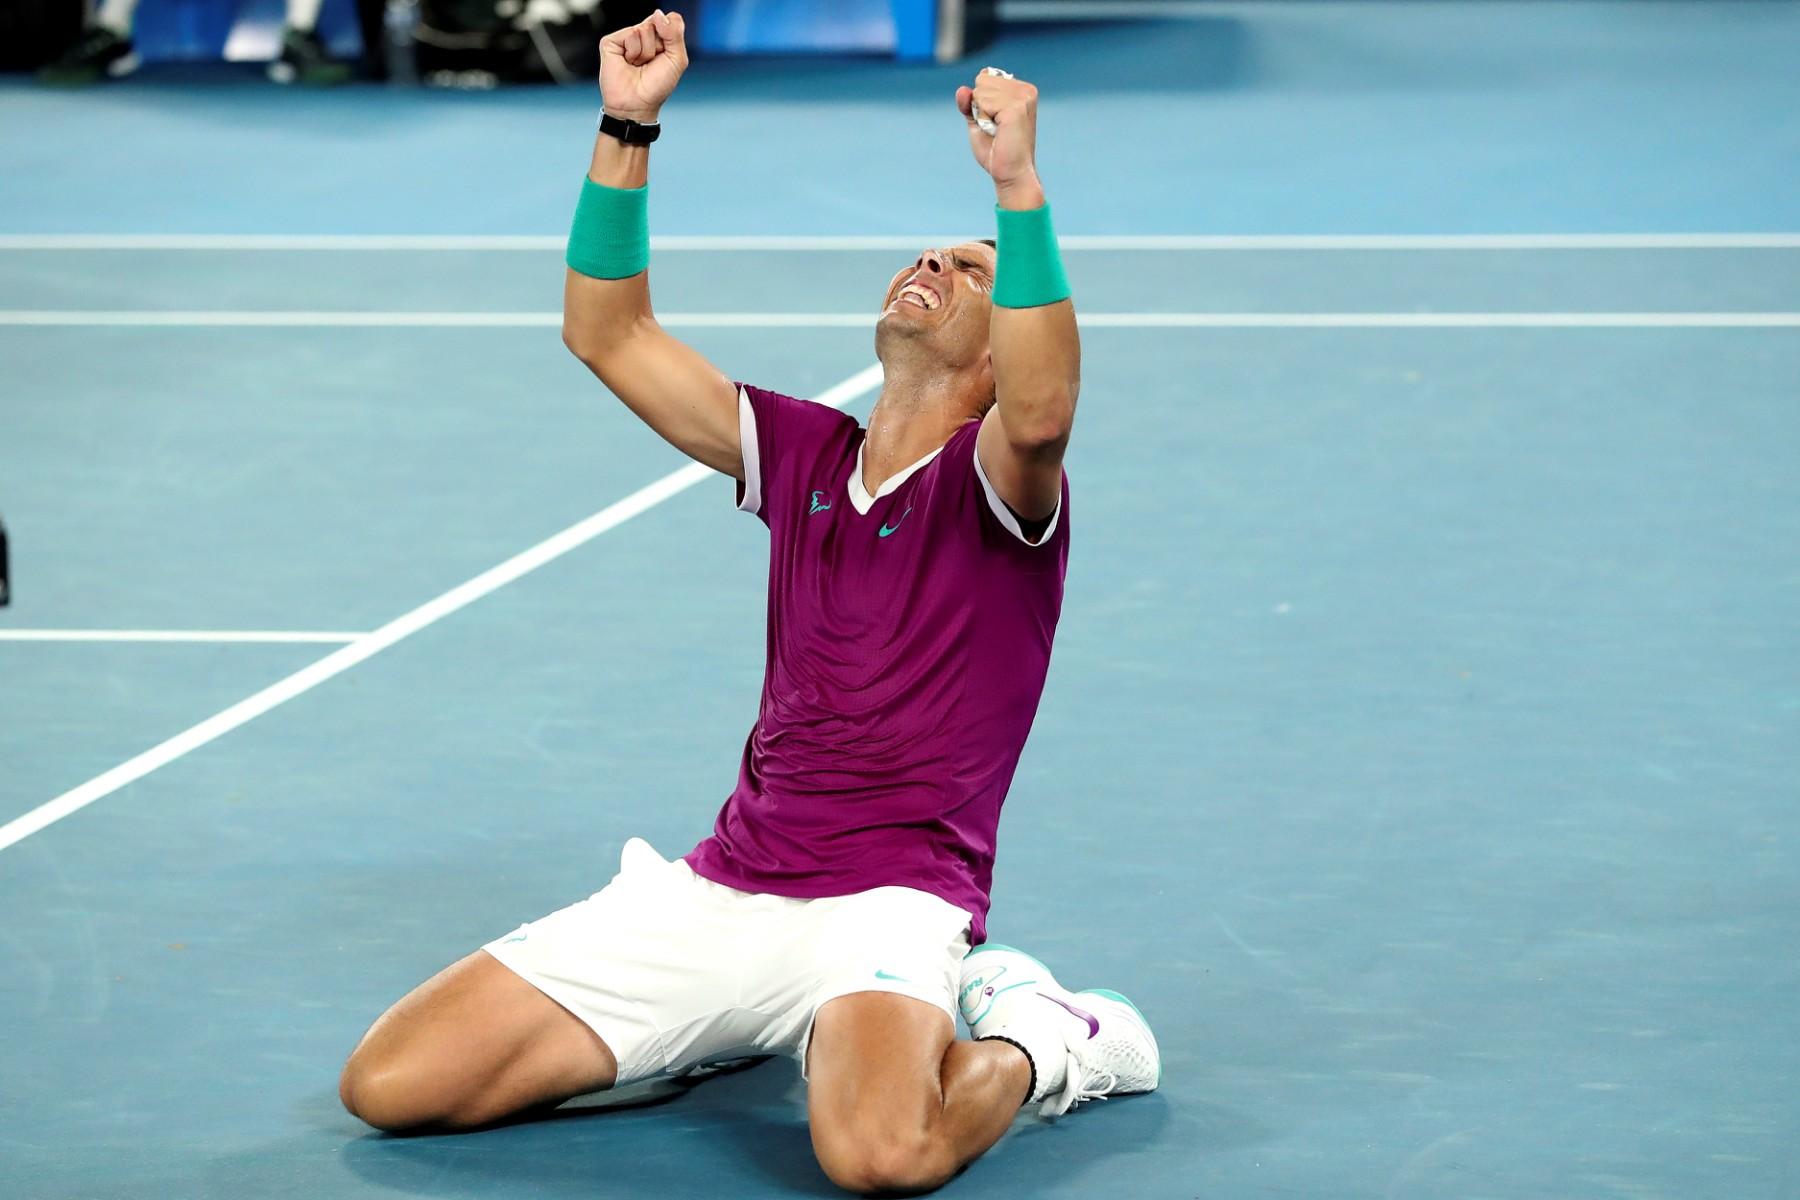 Spain's Rafael Nadal celebrates winning the men's singles final match against Russia's Daniil Medvedev on day fourteen of the Australian Open tennis tournament in Melbourne on Jan 31. Photo: AFP